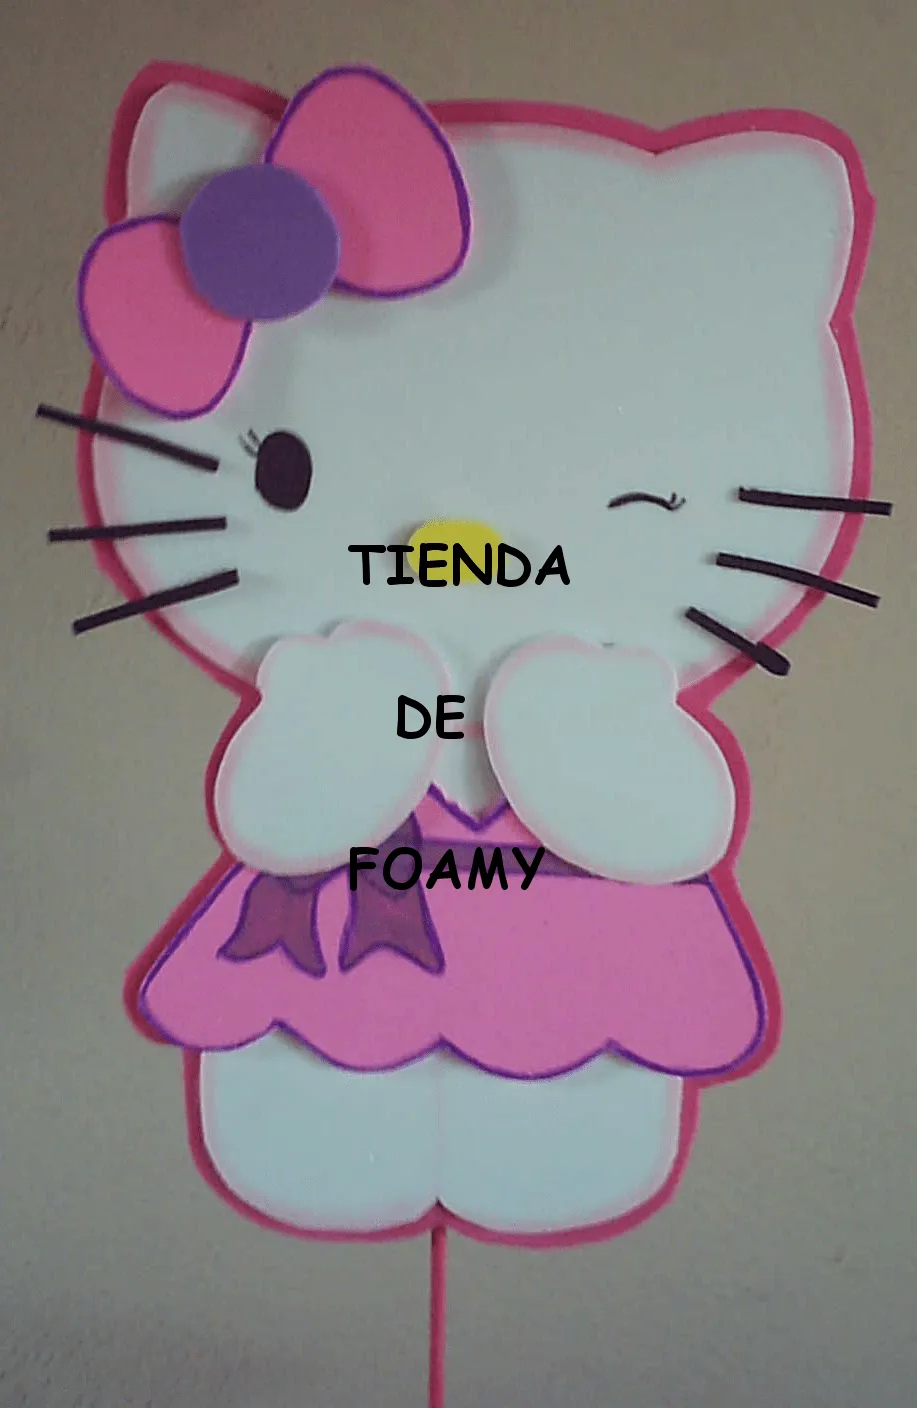 Pin Tienda Foamy Centro Mesa Mini Dispensador Hello Kitty on Pinterest